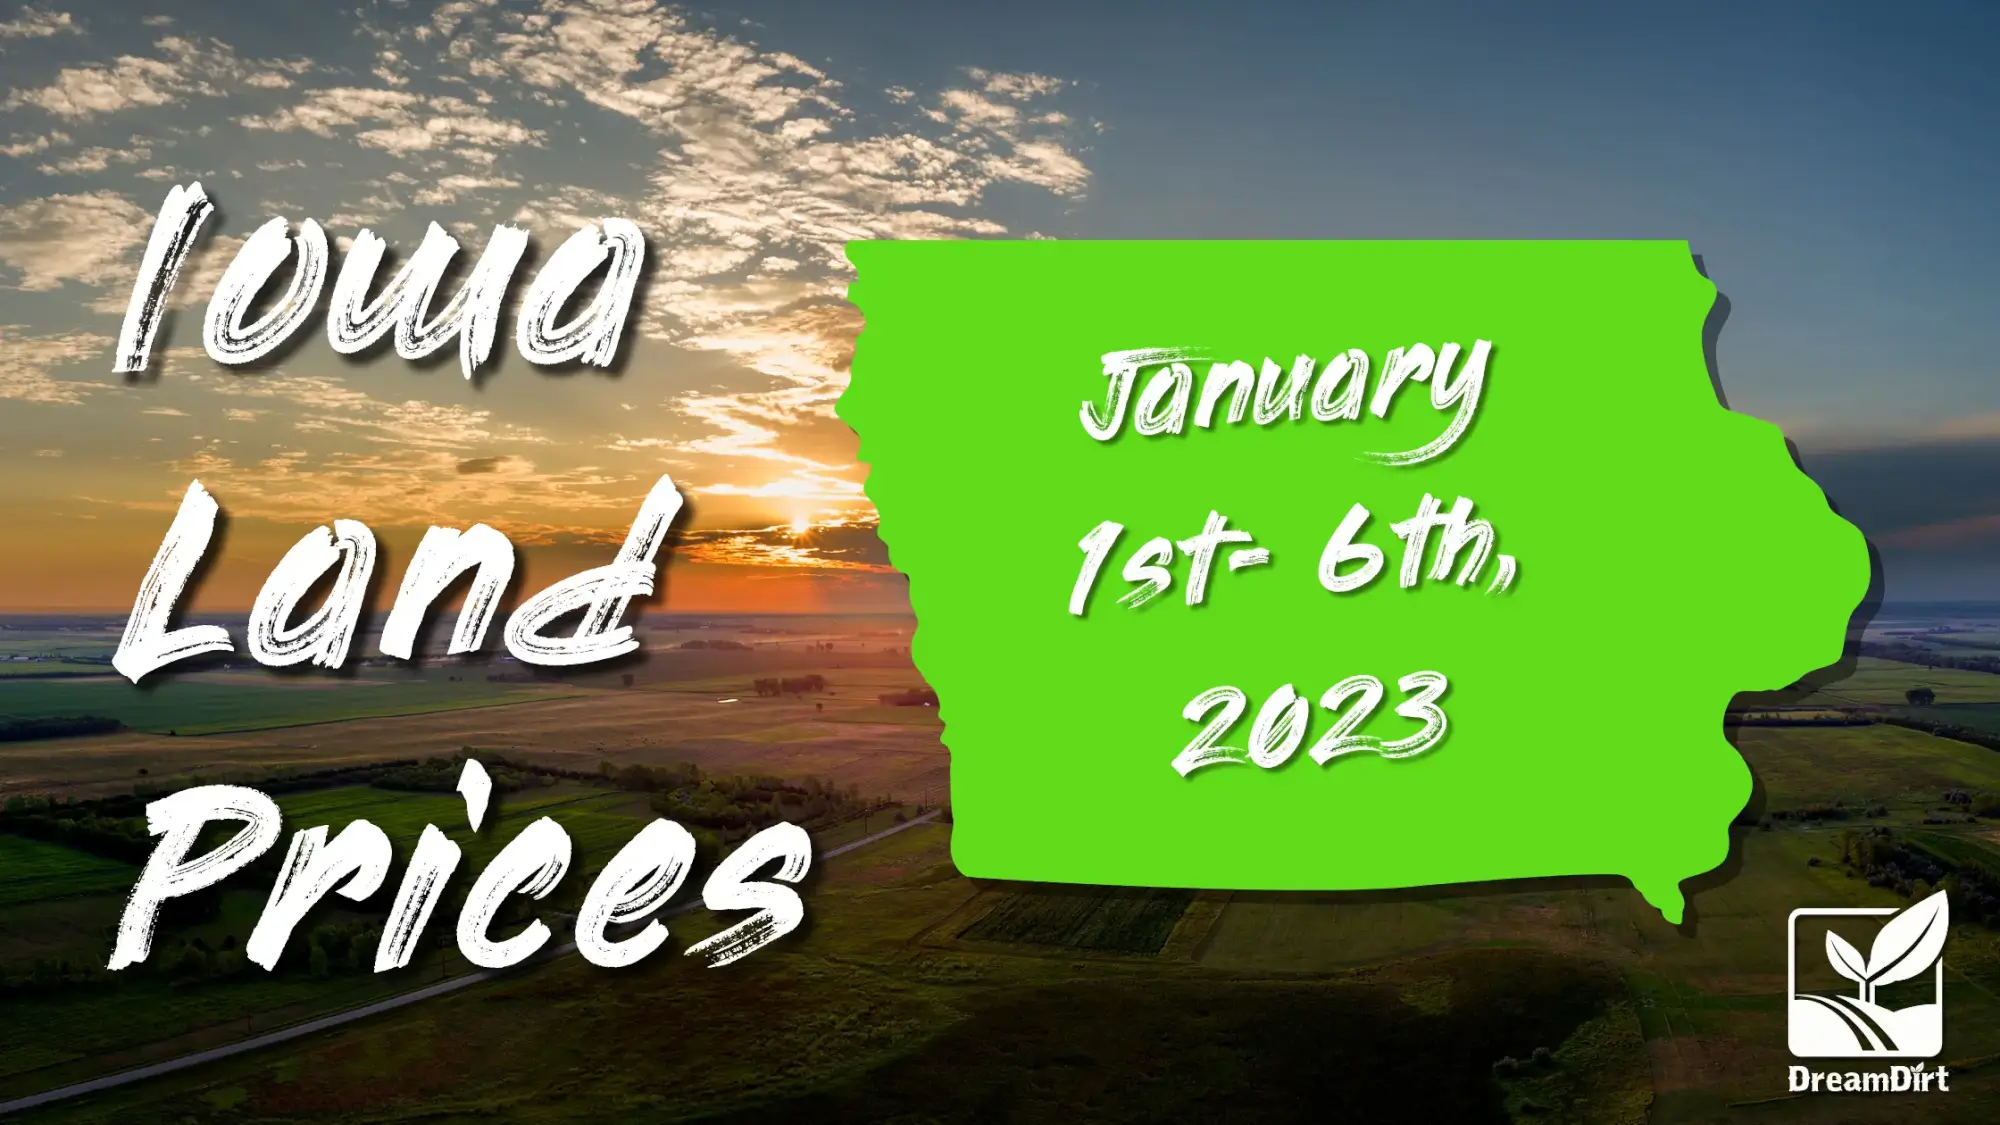 Iowa land prices Jan 1-6